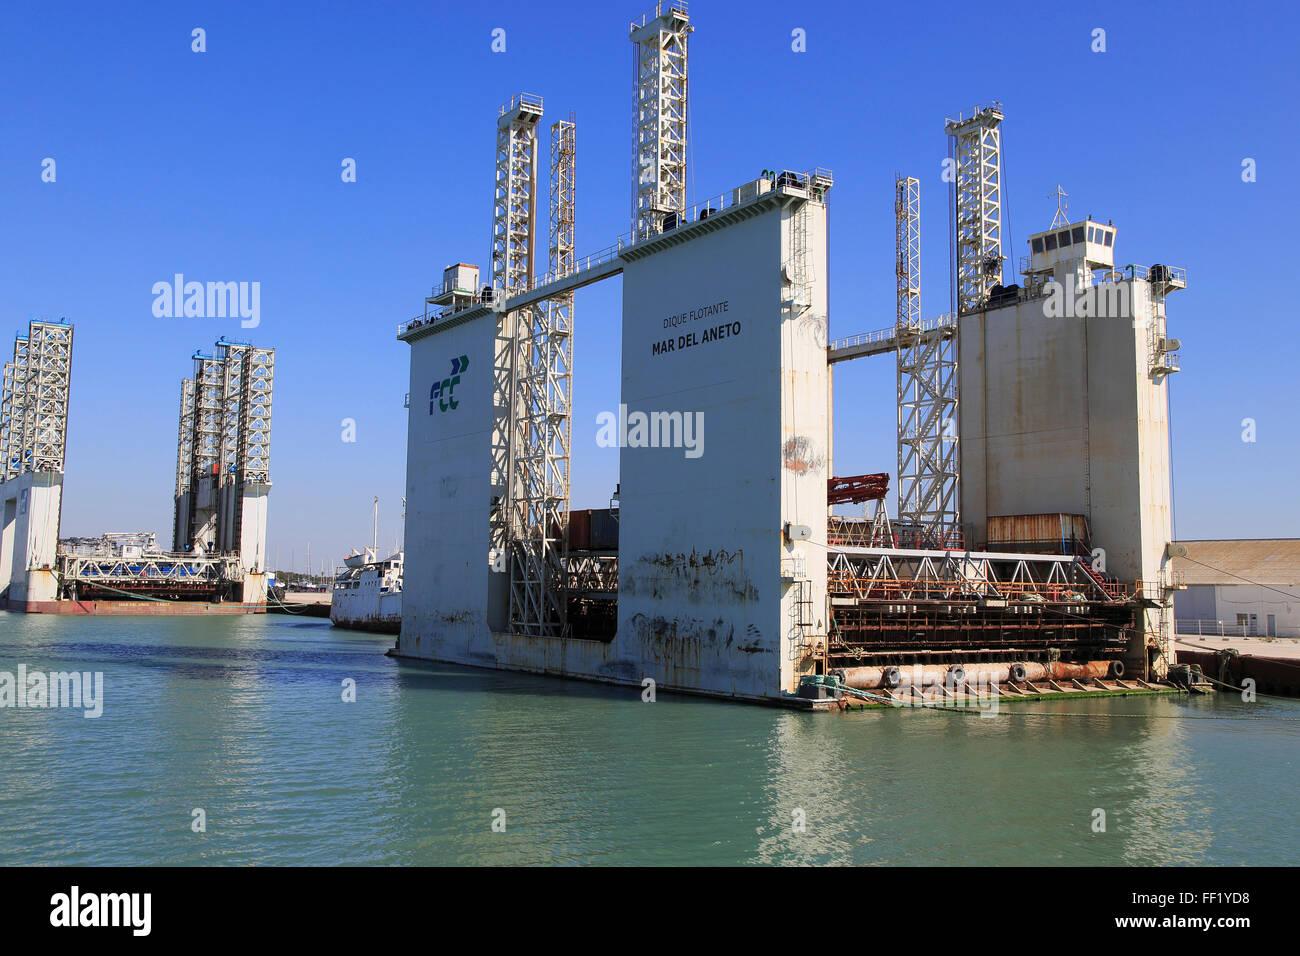 Dock flottant Mar del Aneto, zone portuaire de Puerto de Santa Maria, Cadiz Province,, Espagne Banque D'Images